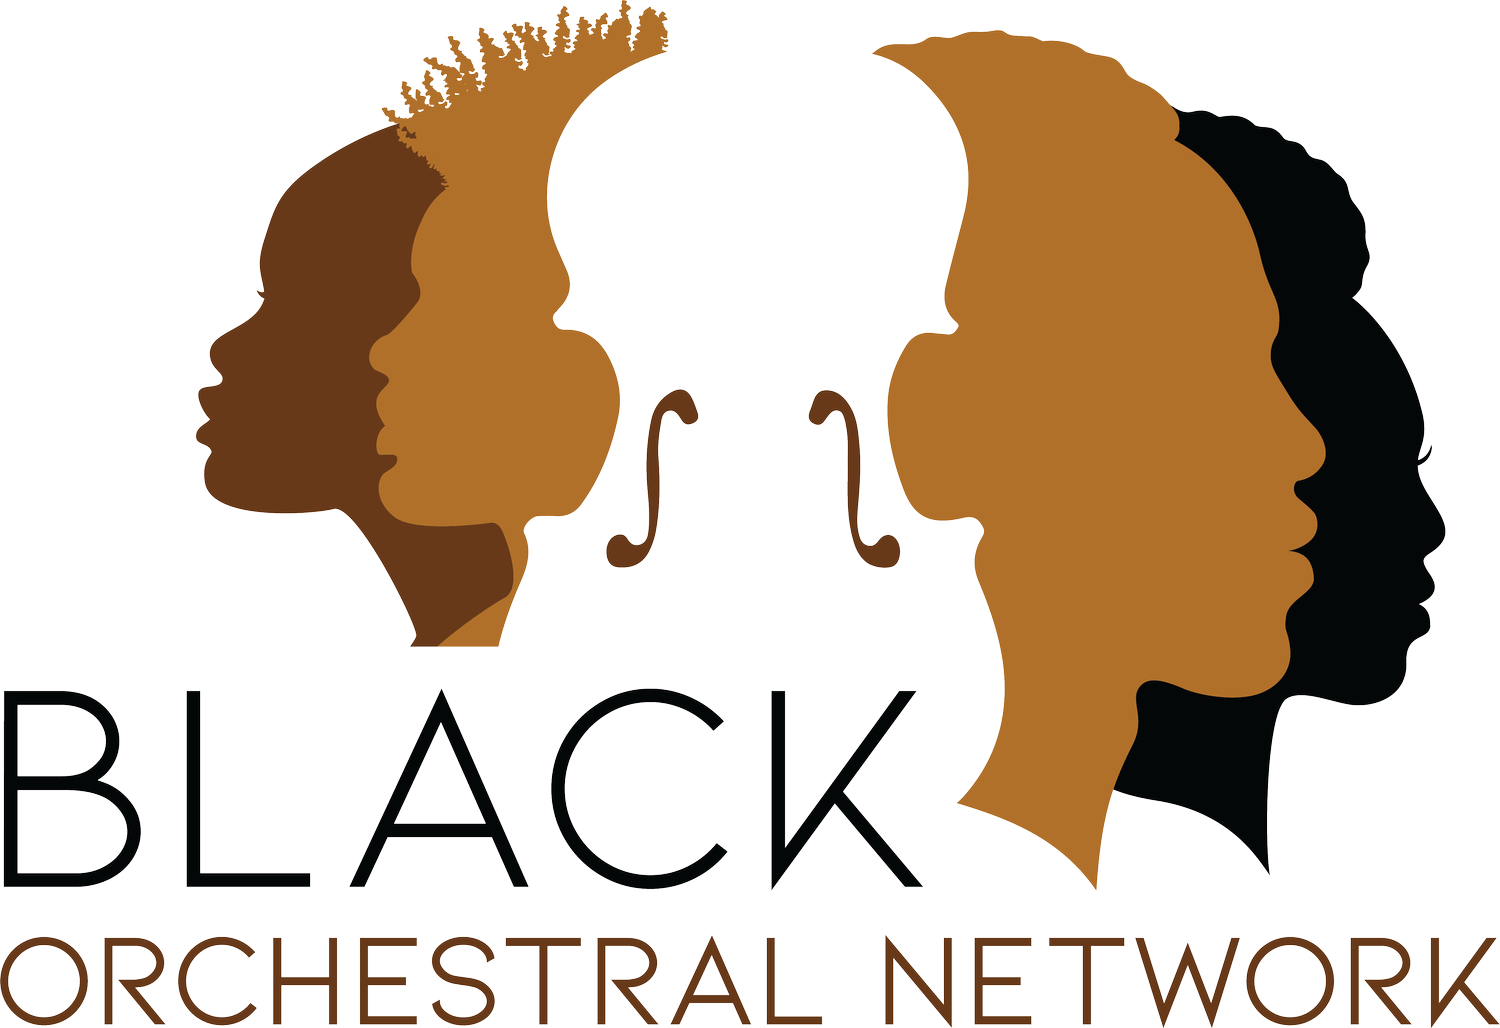 Black orchestra. American Federation of musicians. Black PR.